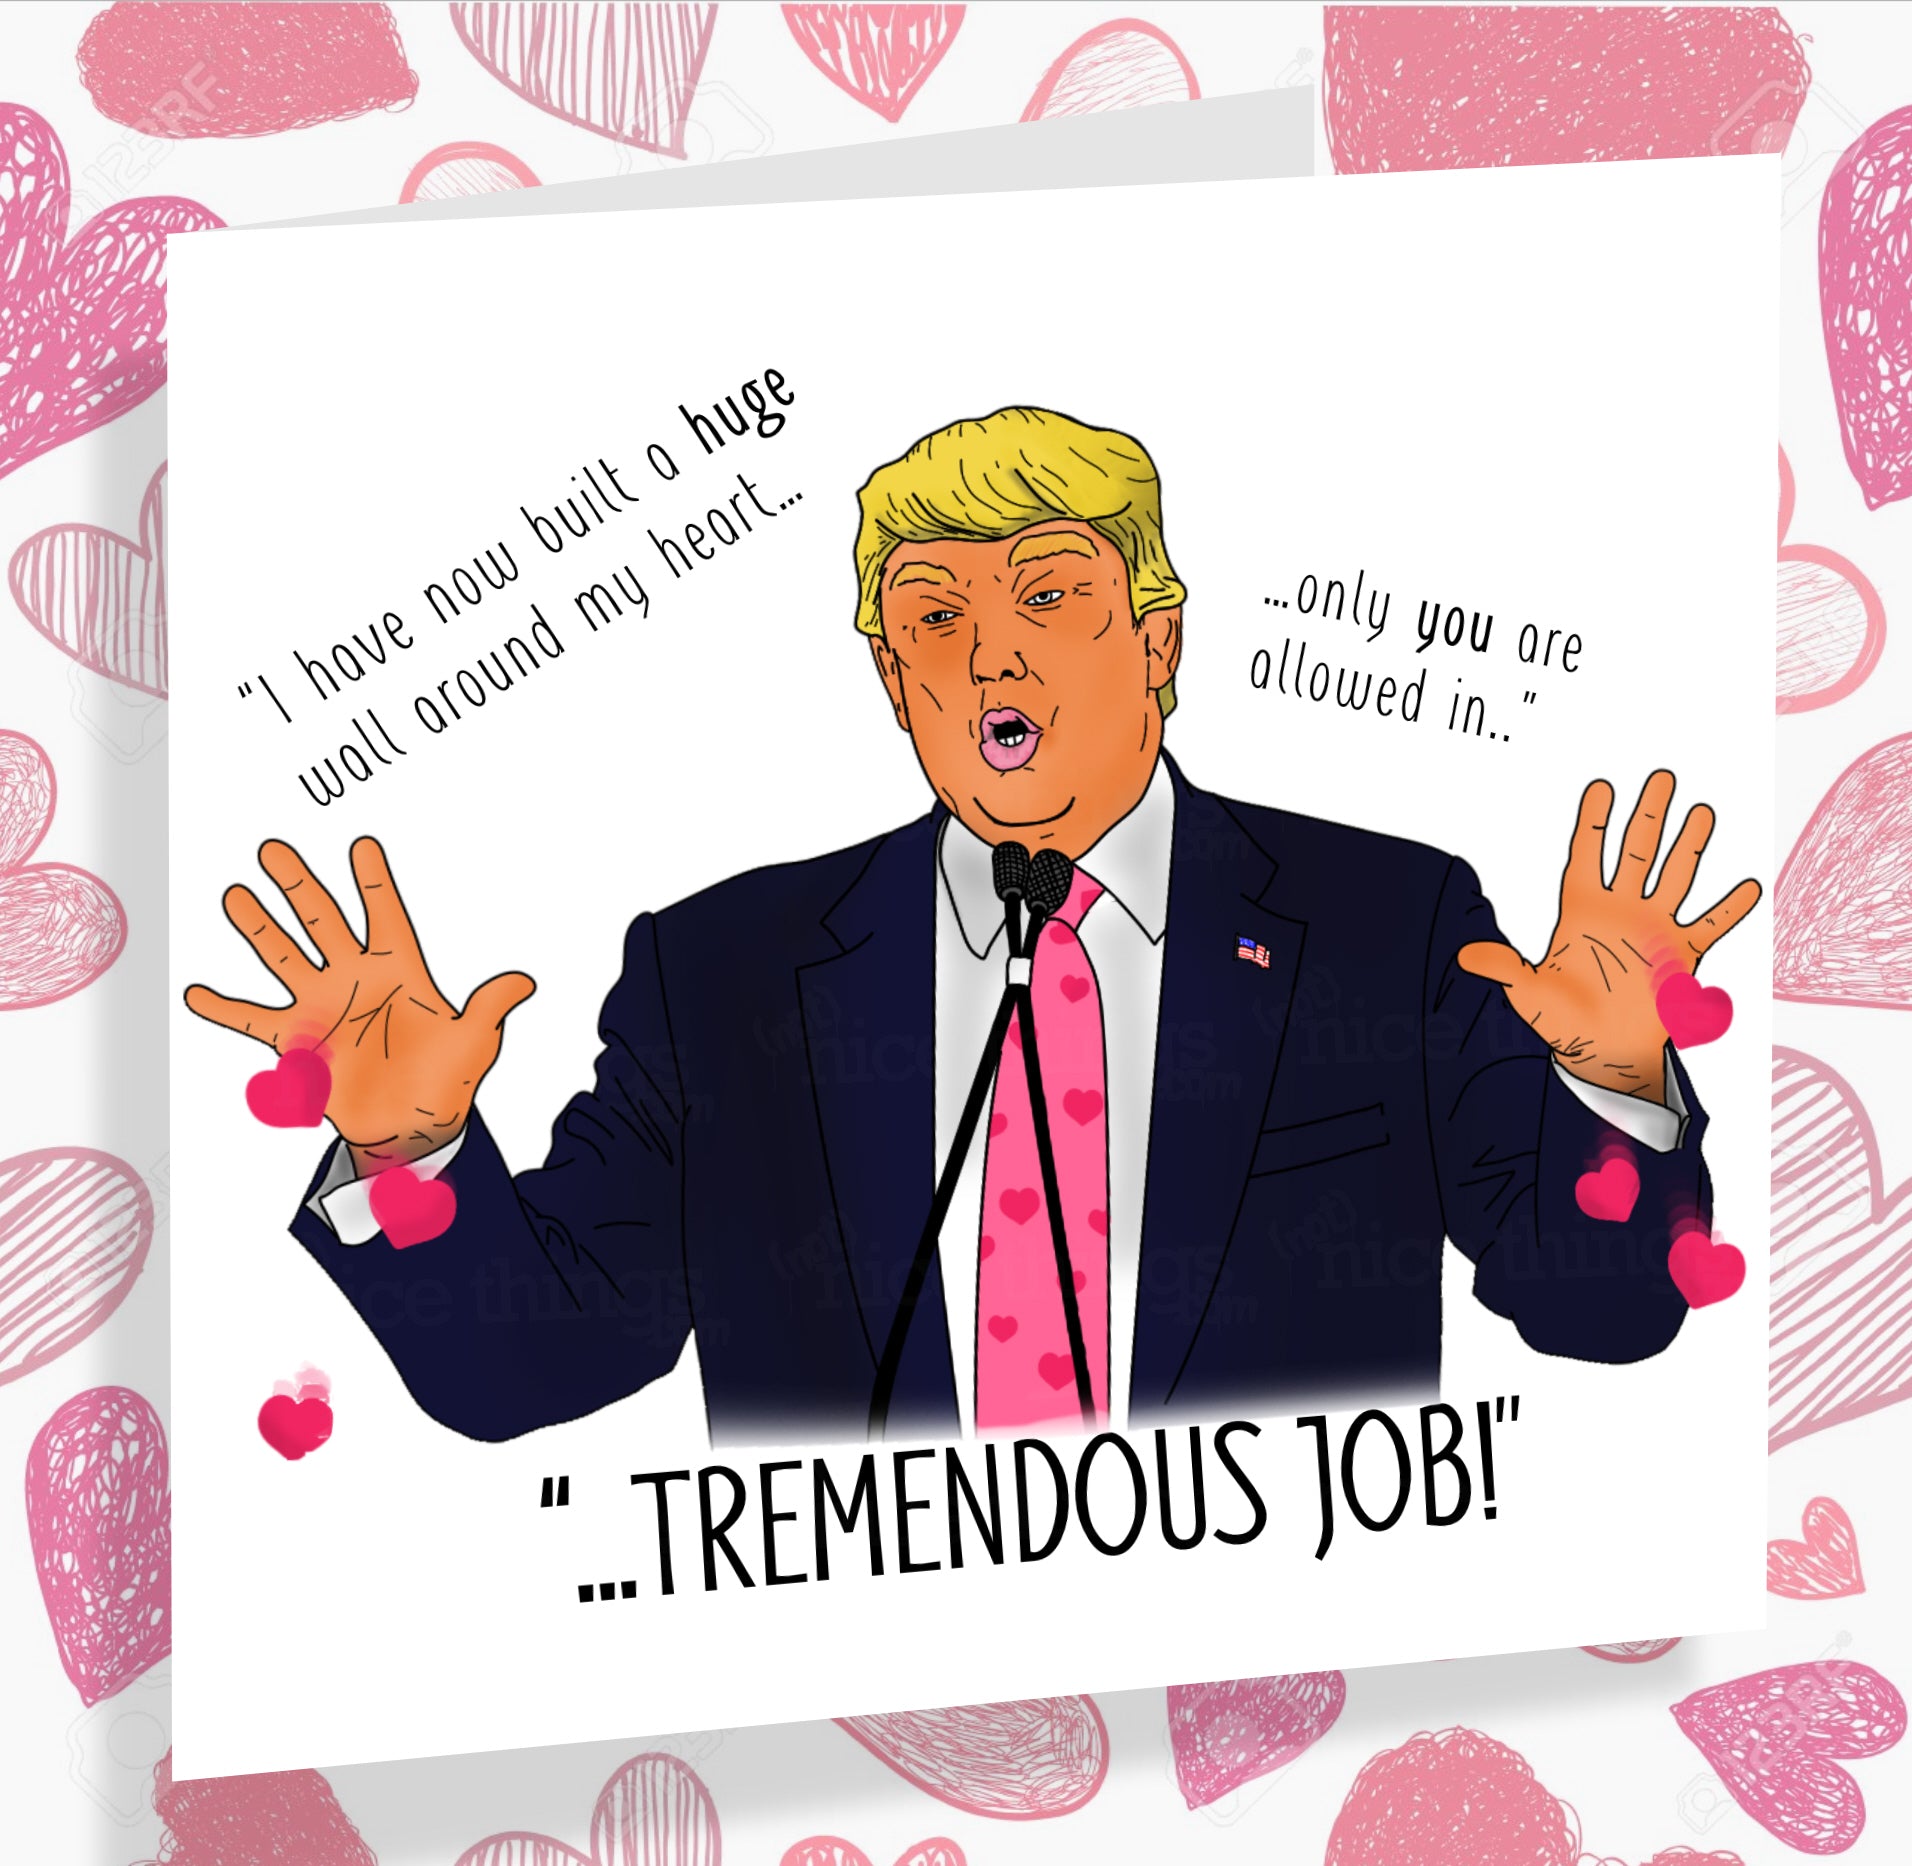 Funny Donald Trump Valentines Card | Joke Card, Funny Valentines Cards for him, Cards for her, Cards for girlfriend, Boyfriend, Fiance, Wife